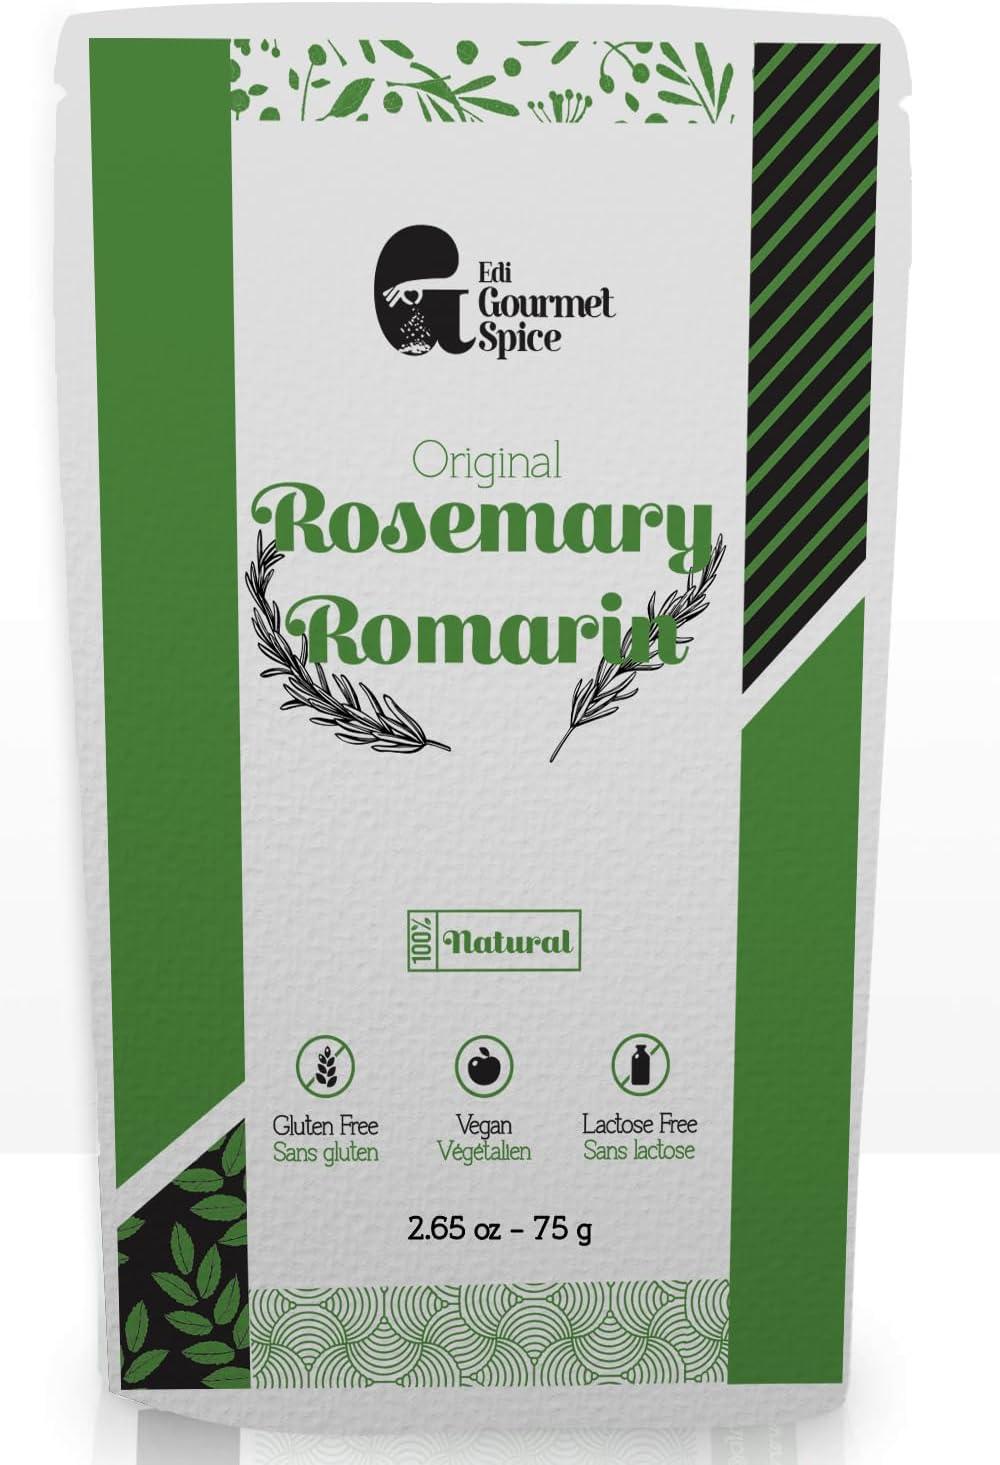 Dried Rosemary - Edi Gourmet Spice